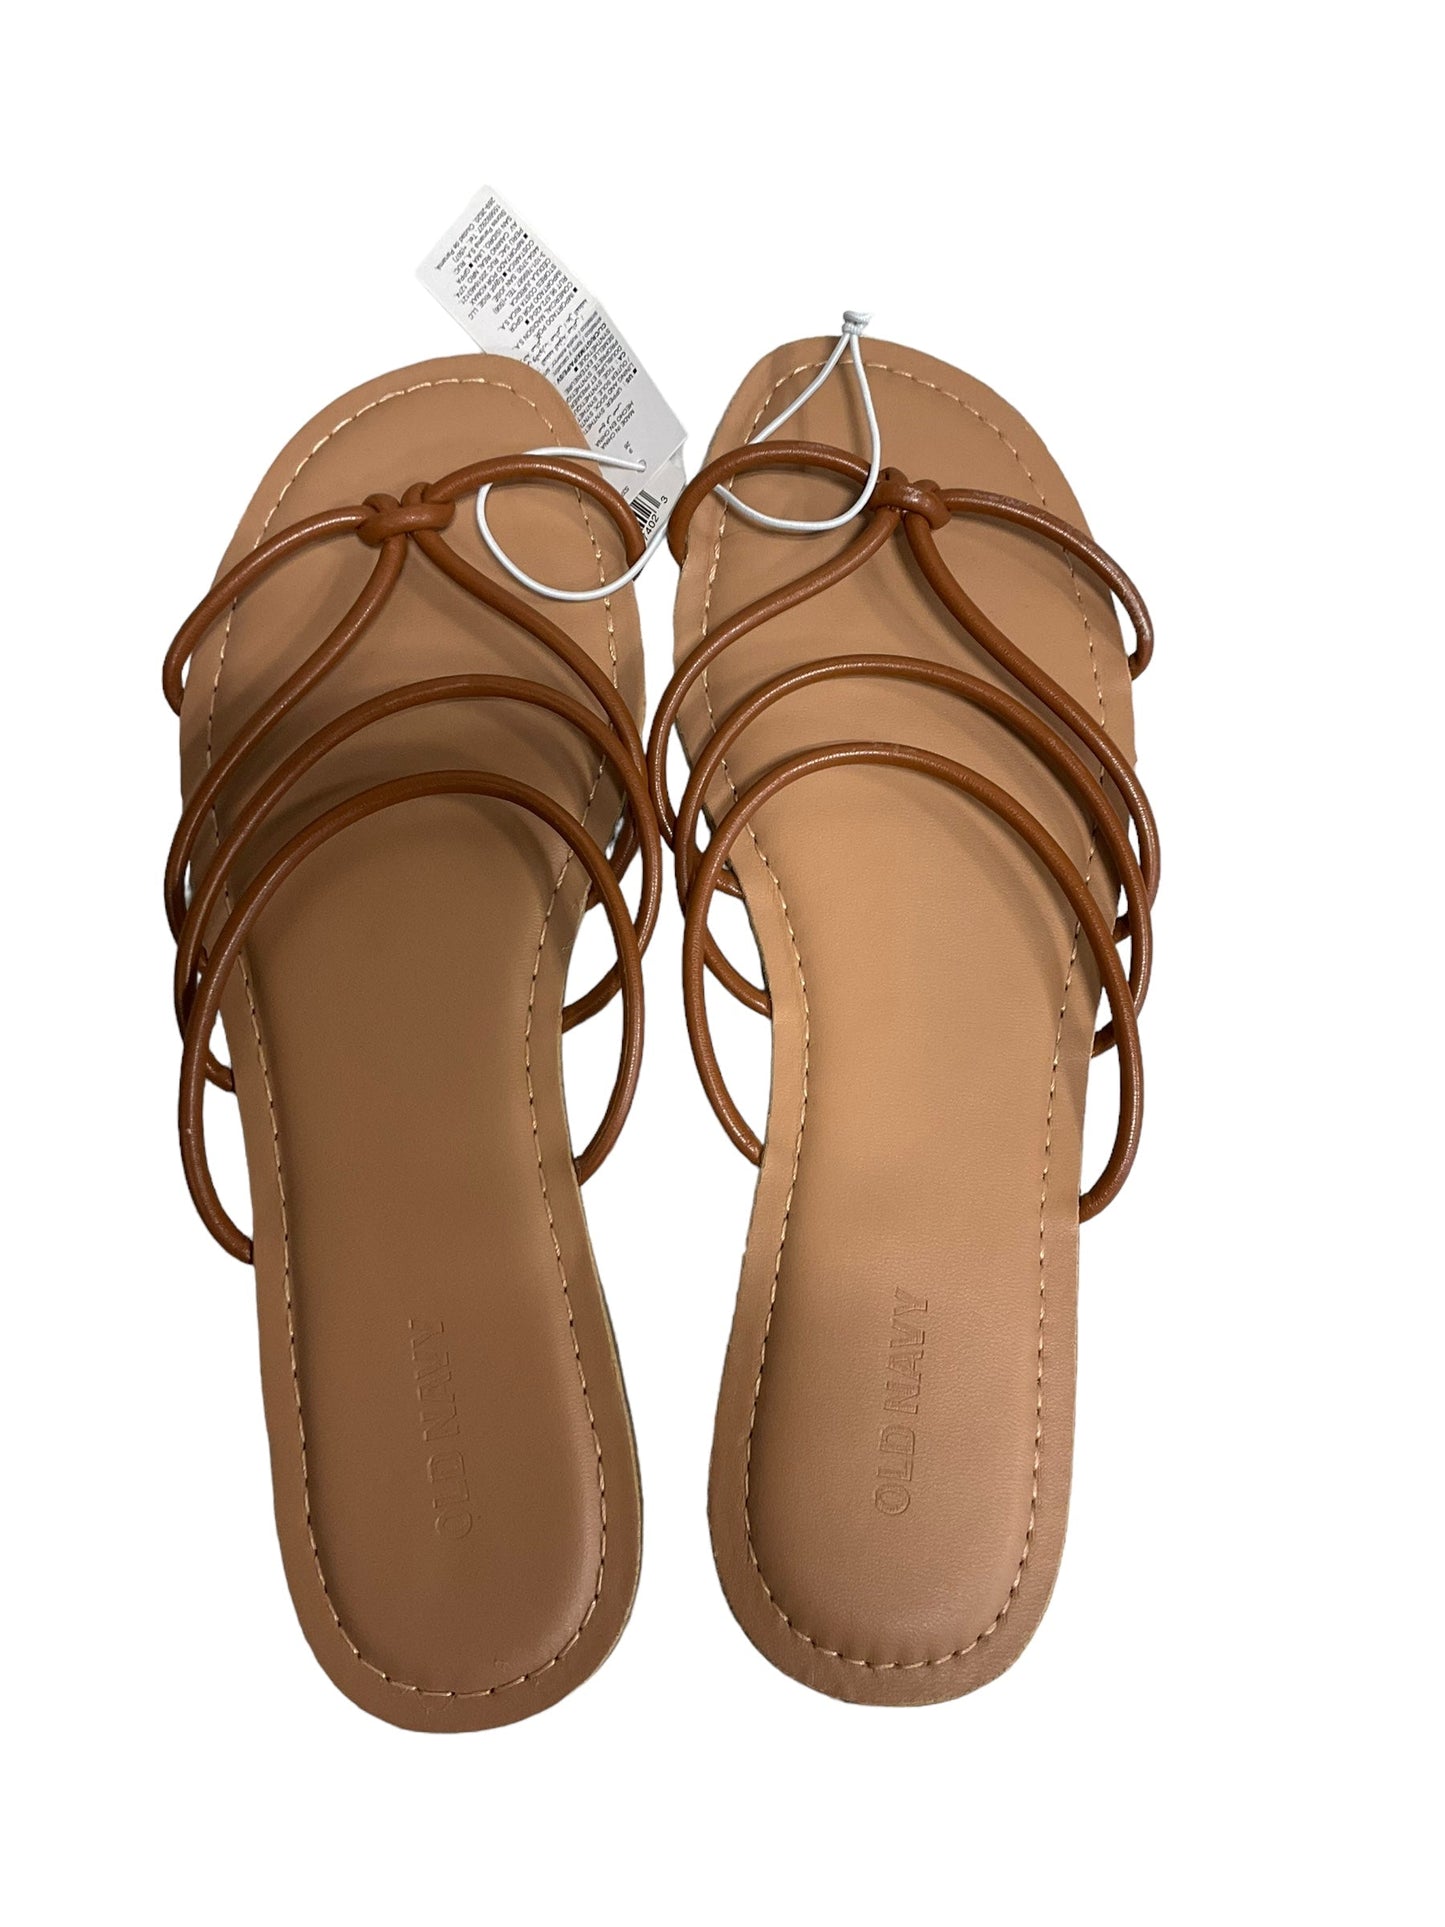 Tan Sandals Flip Flops Old Navy, Size 9